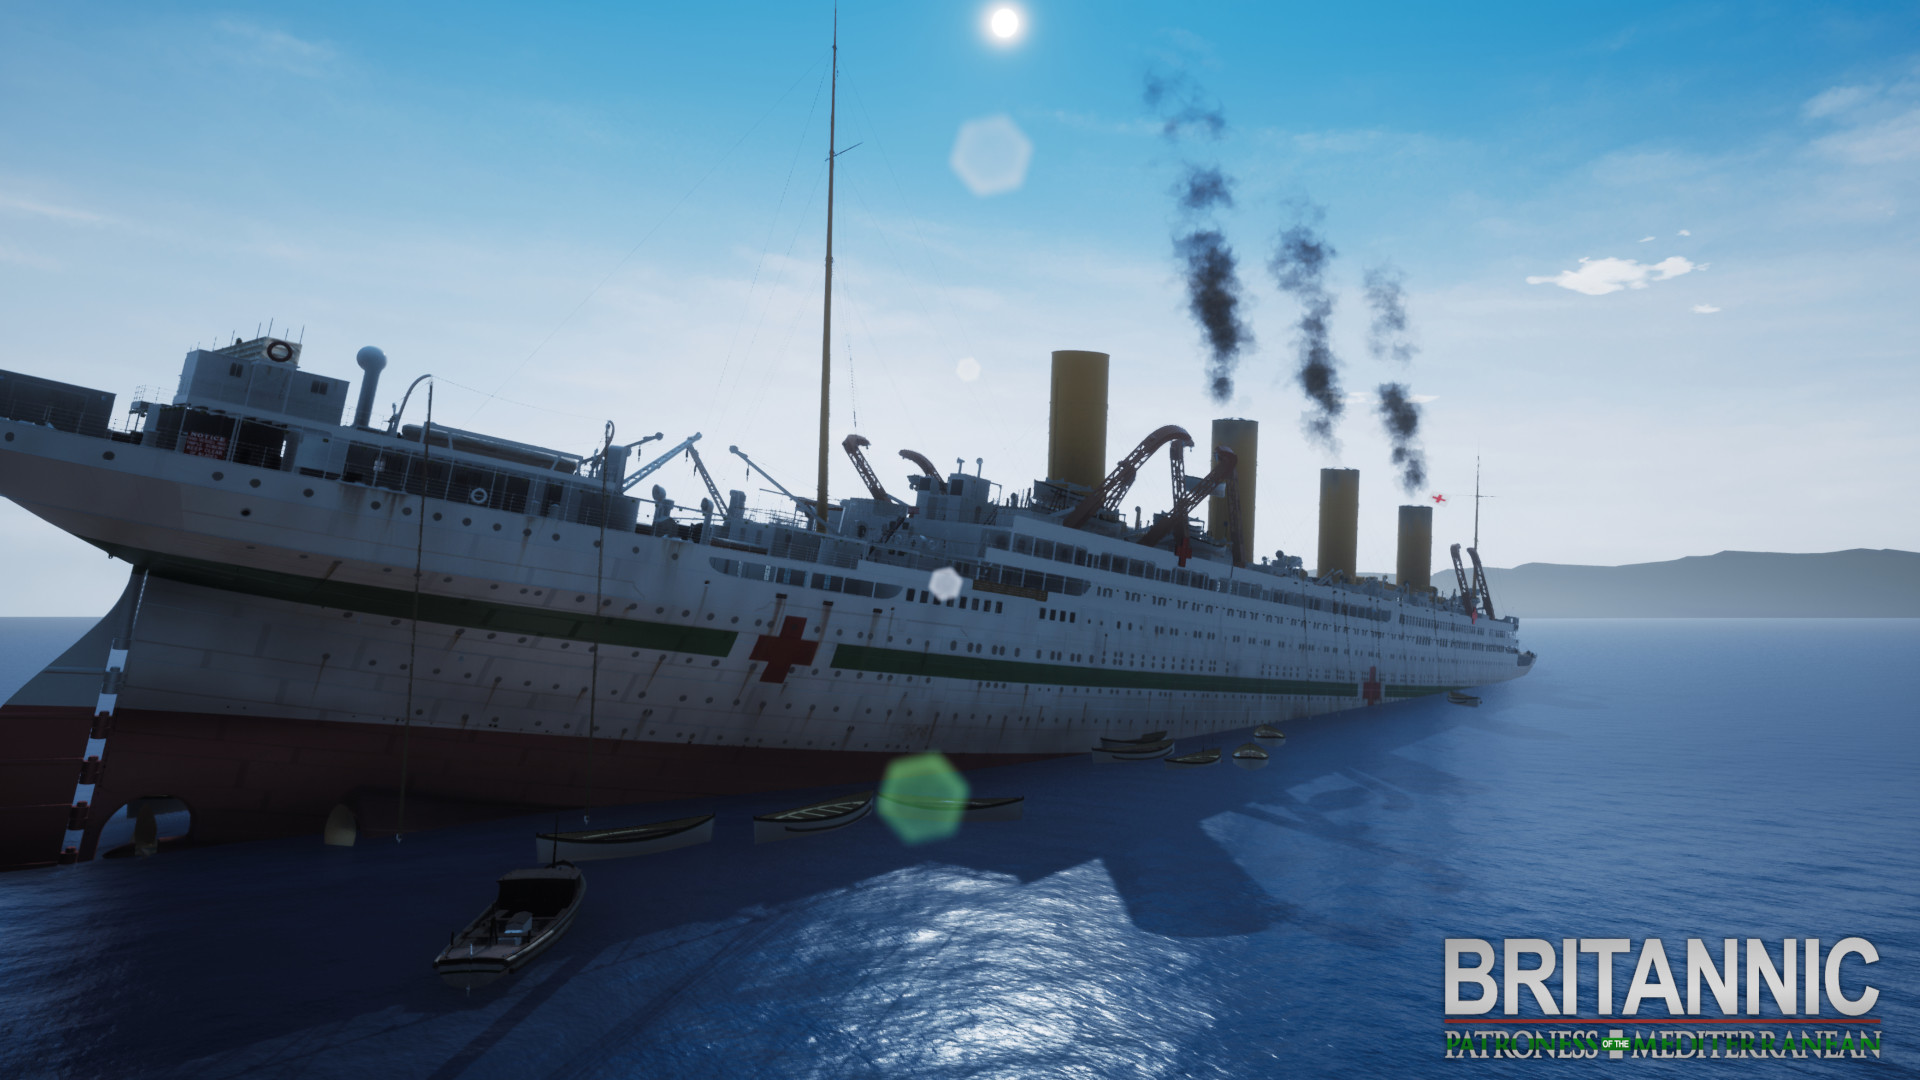 Britannic Patroness Of The Mediterranean On Steam - roblox britannic sinking games for ios